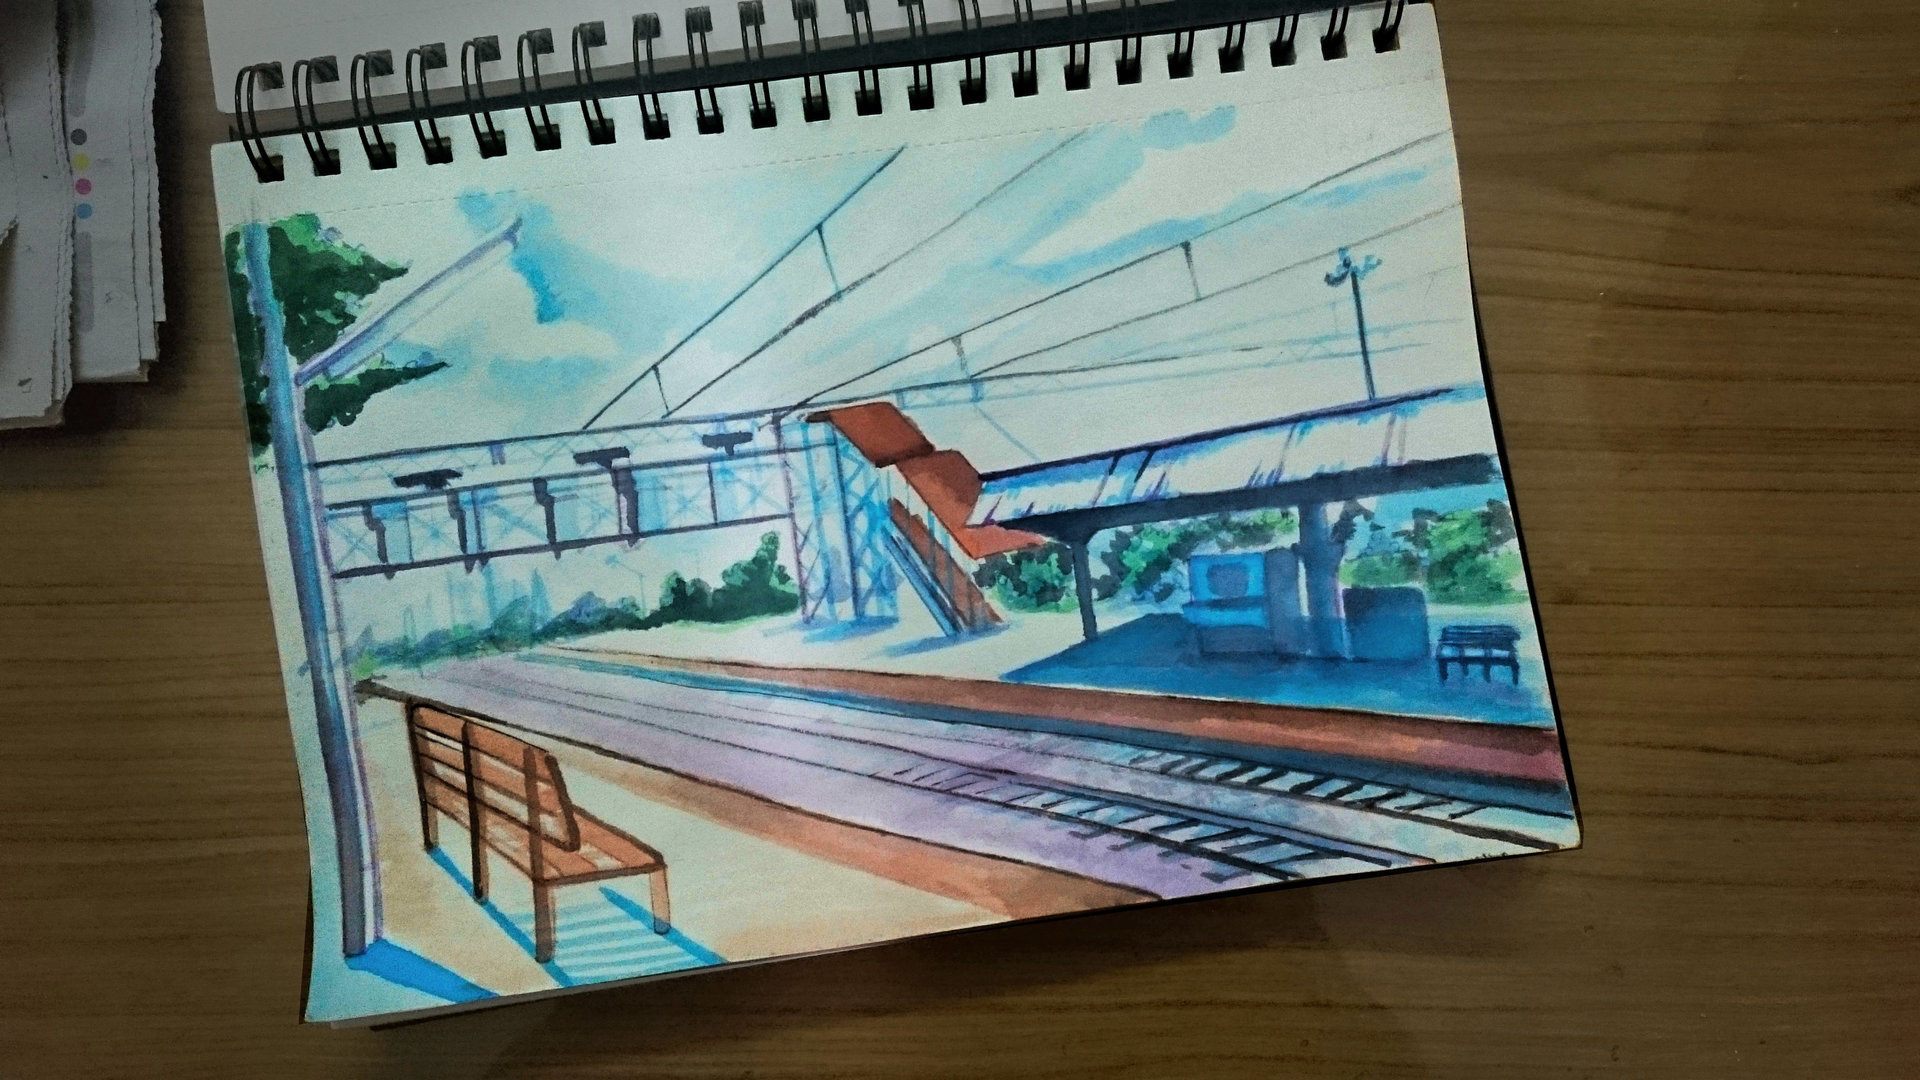 railway station scene drawing